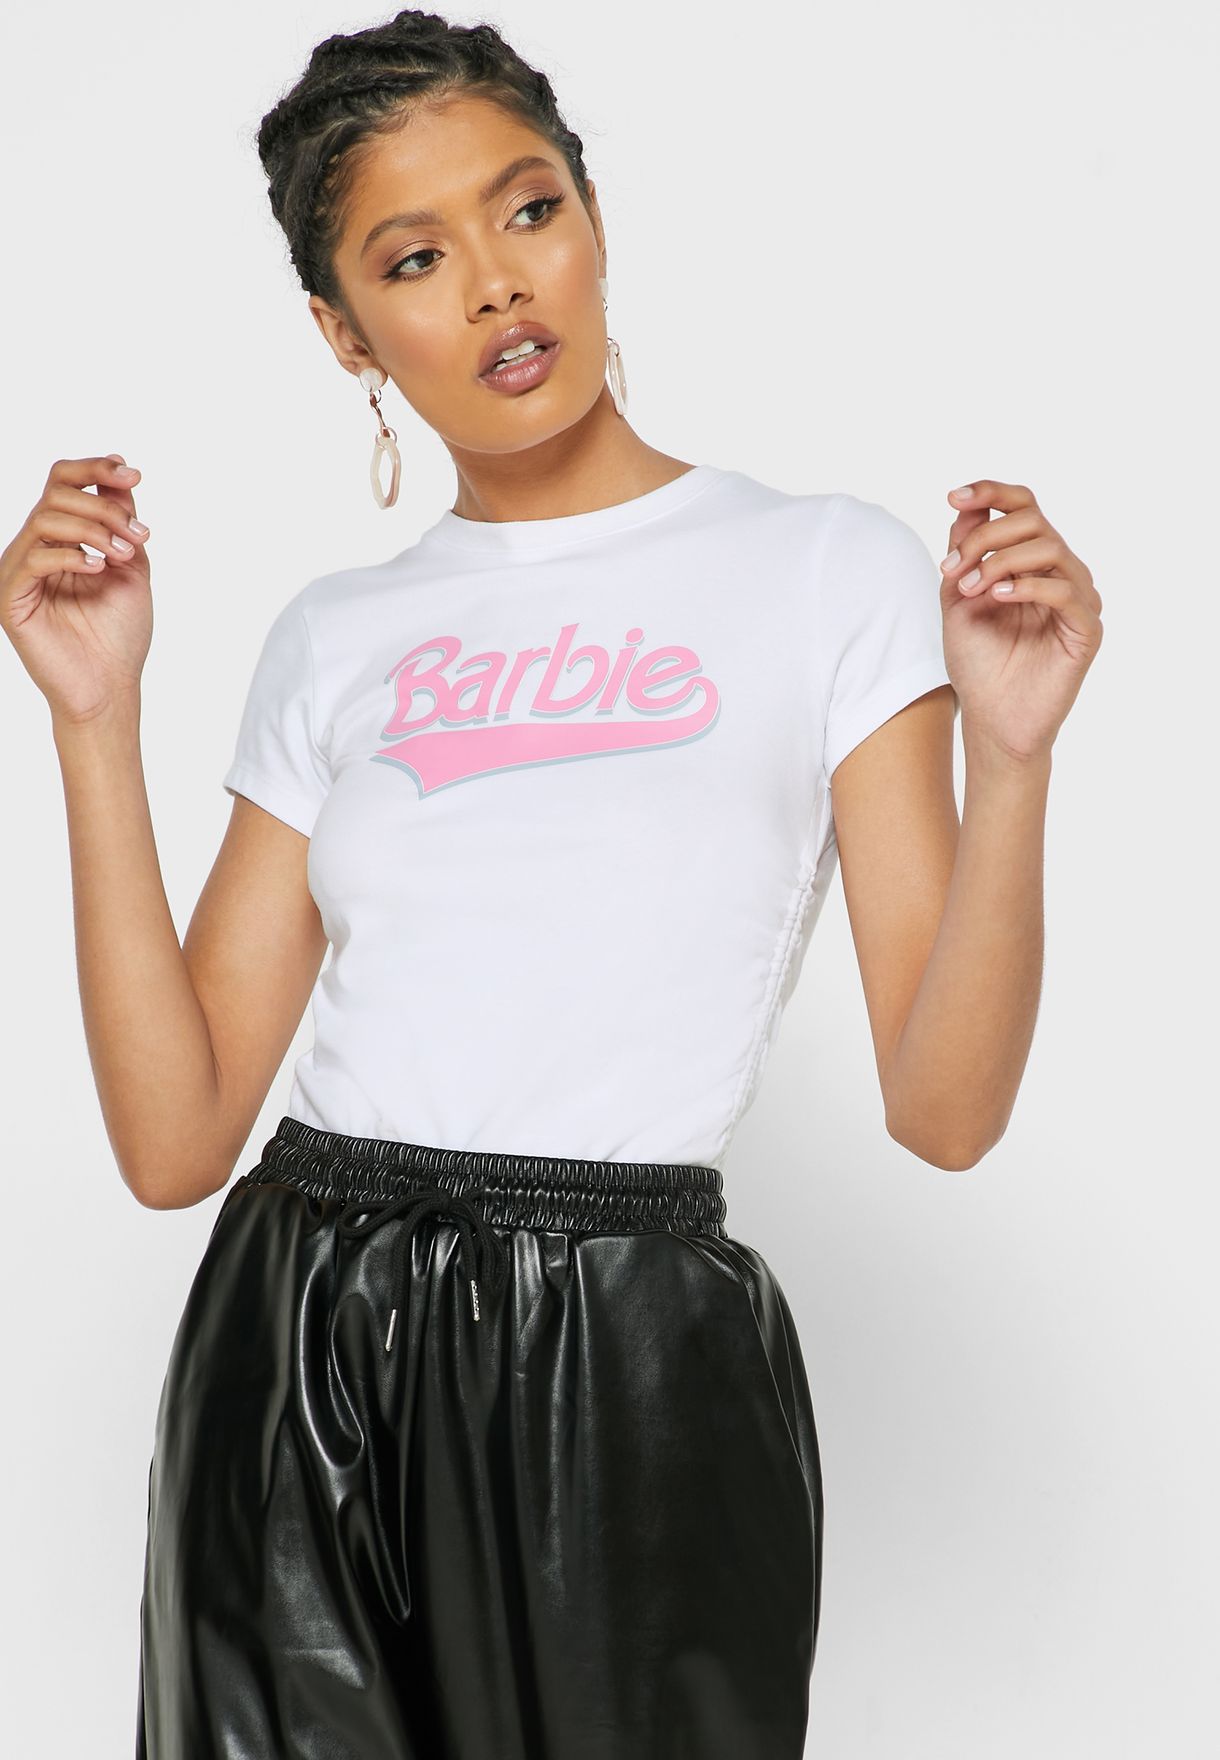 barbie t shirt forever 21